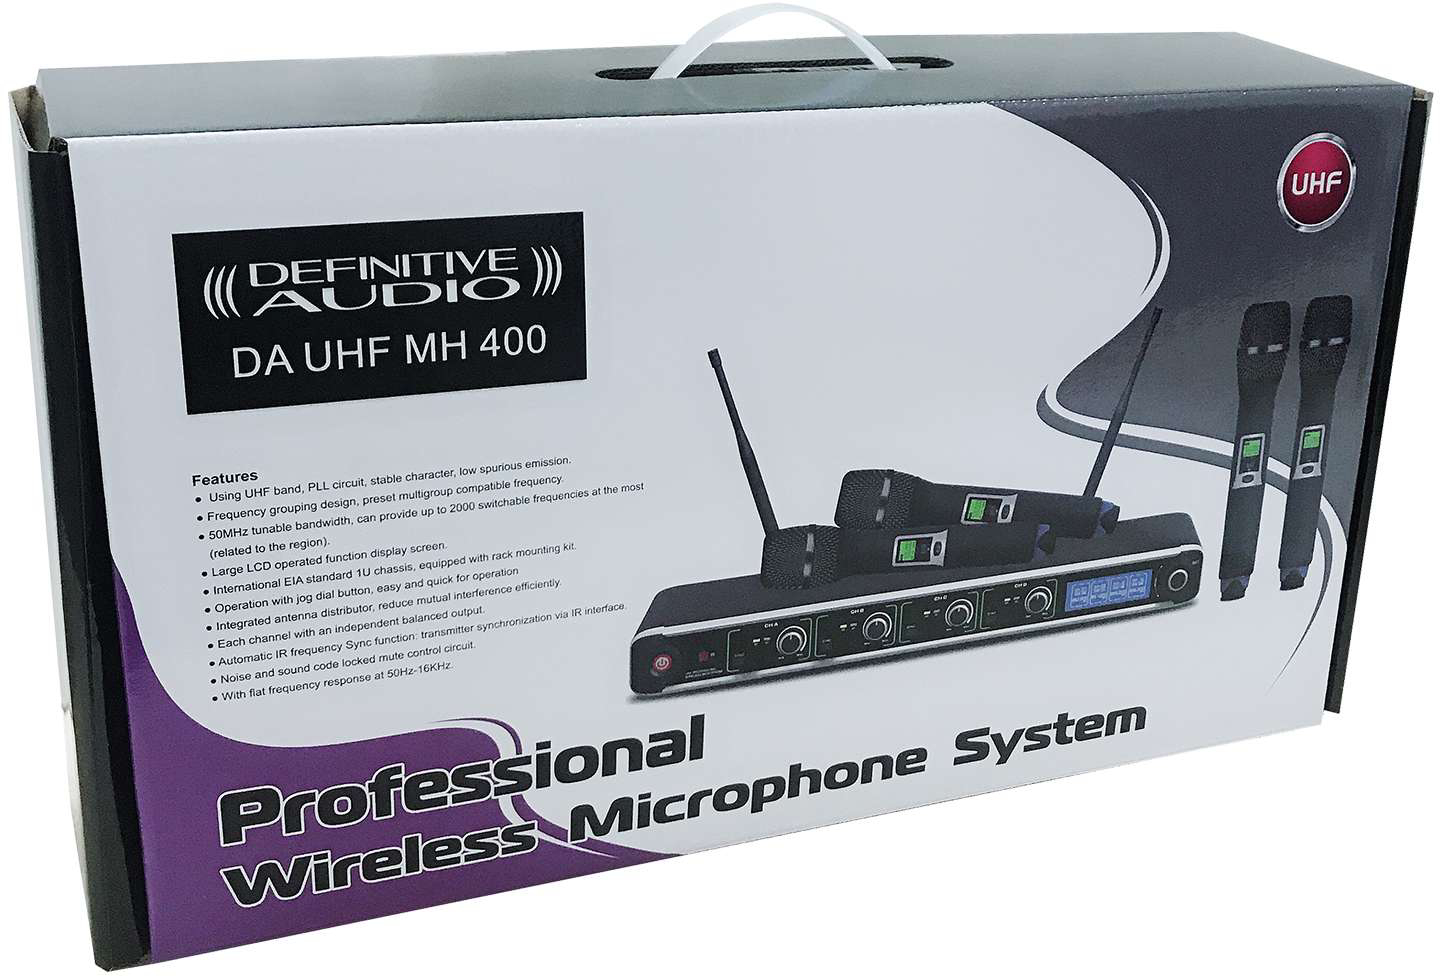 Definitive Audio Da Uhf Mh 400 - Wireless handheld microphone - Variation 4